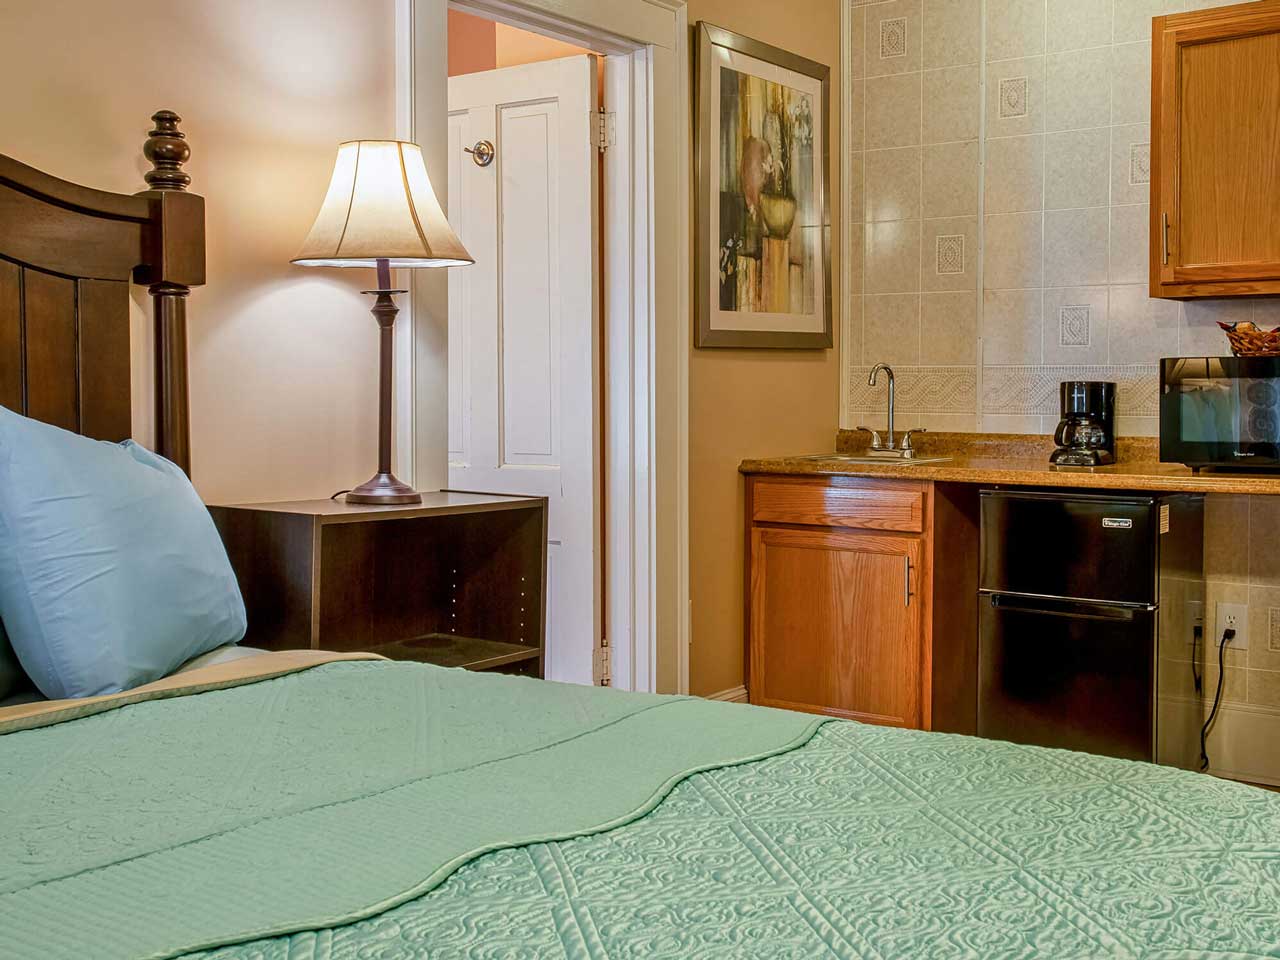 Beechnut Bedroom - Inn on Maple Street, Port Allegany, PA